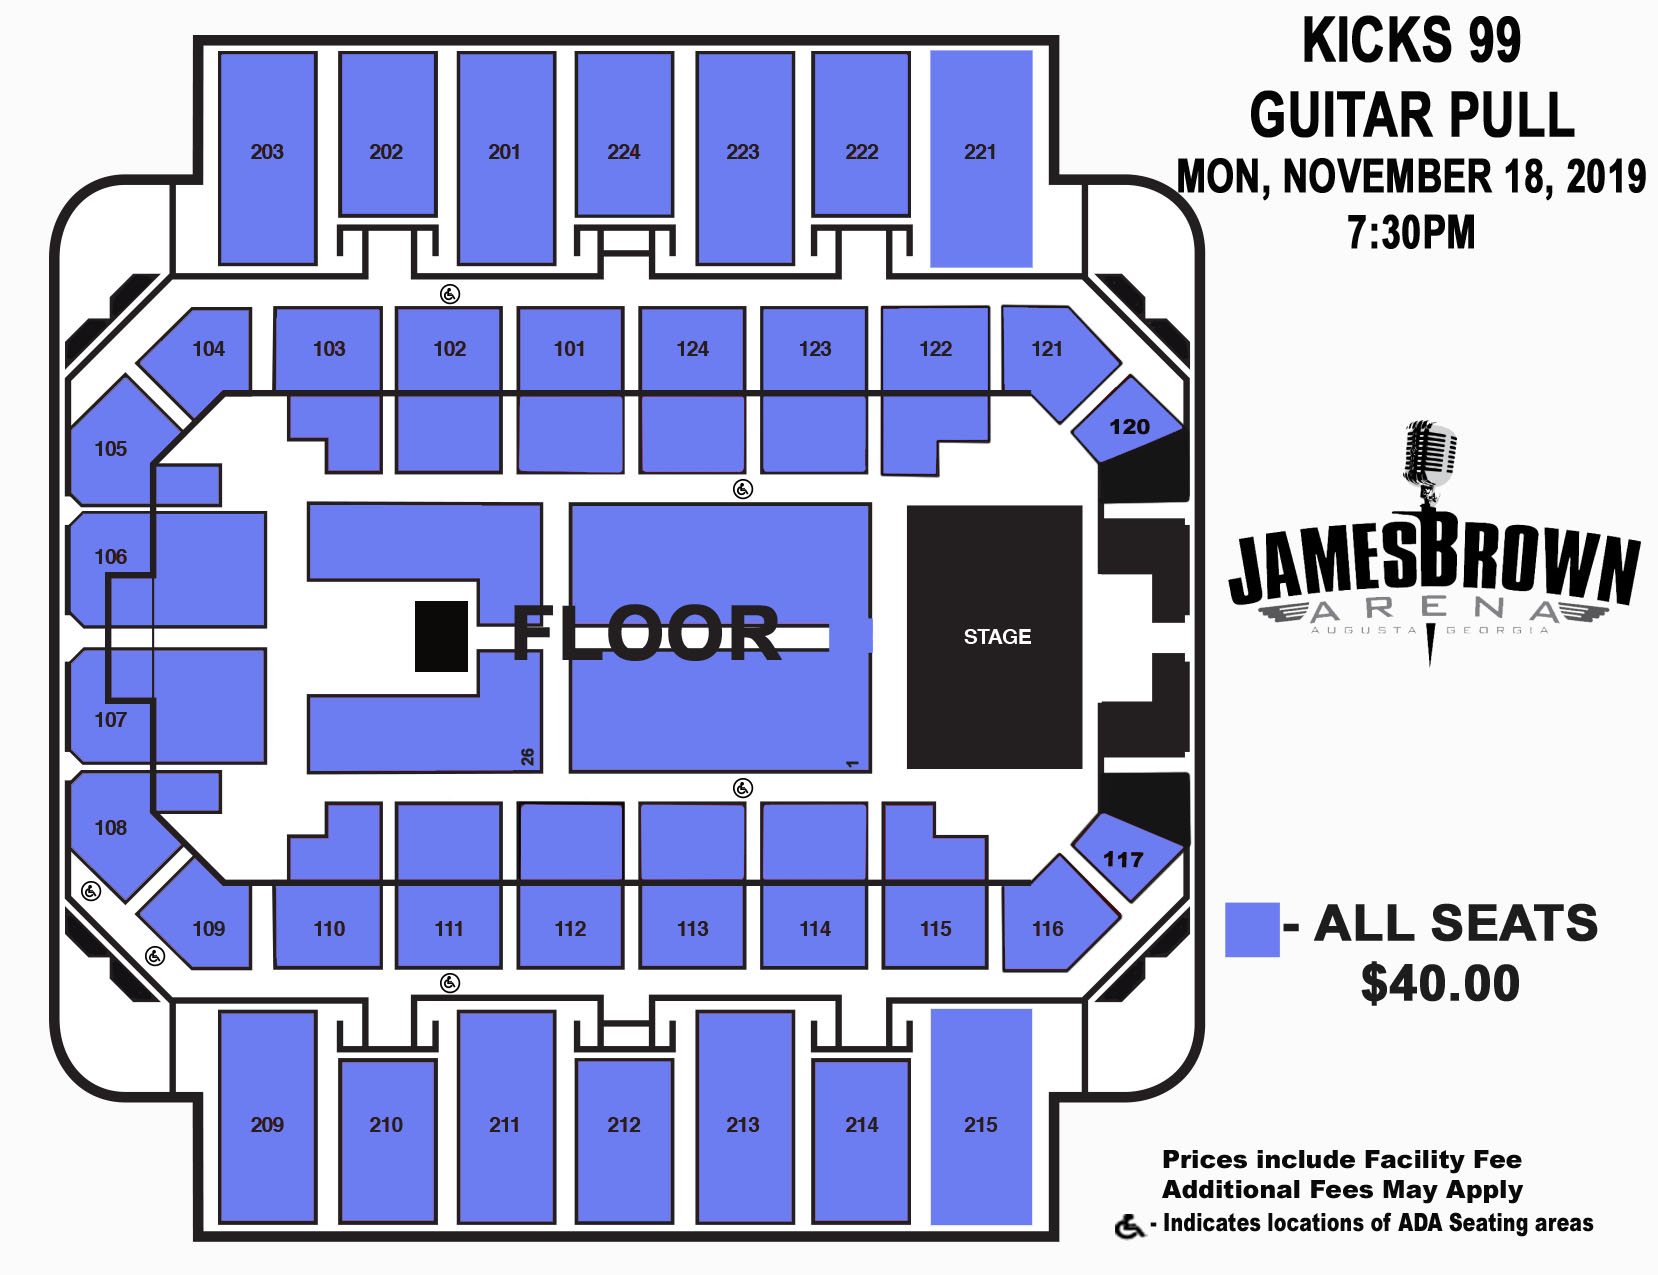 James Brown Arena Guitar Pull Seating Chart